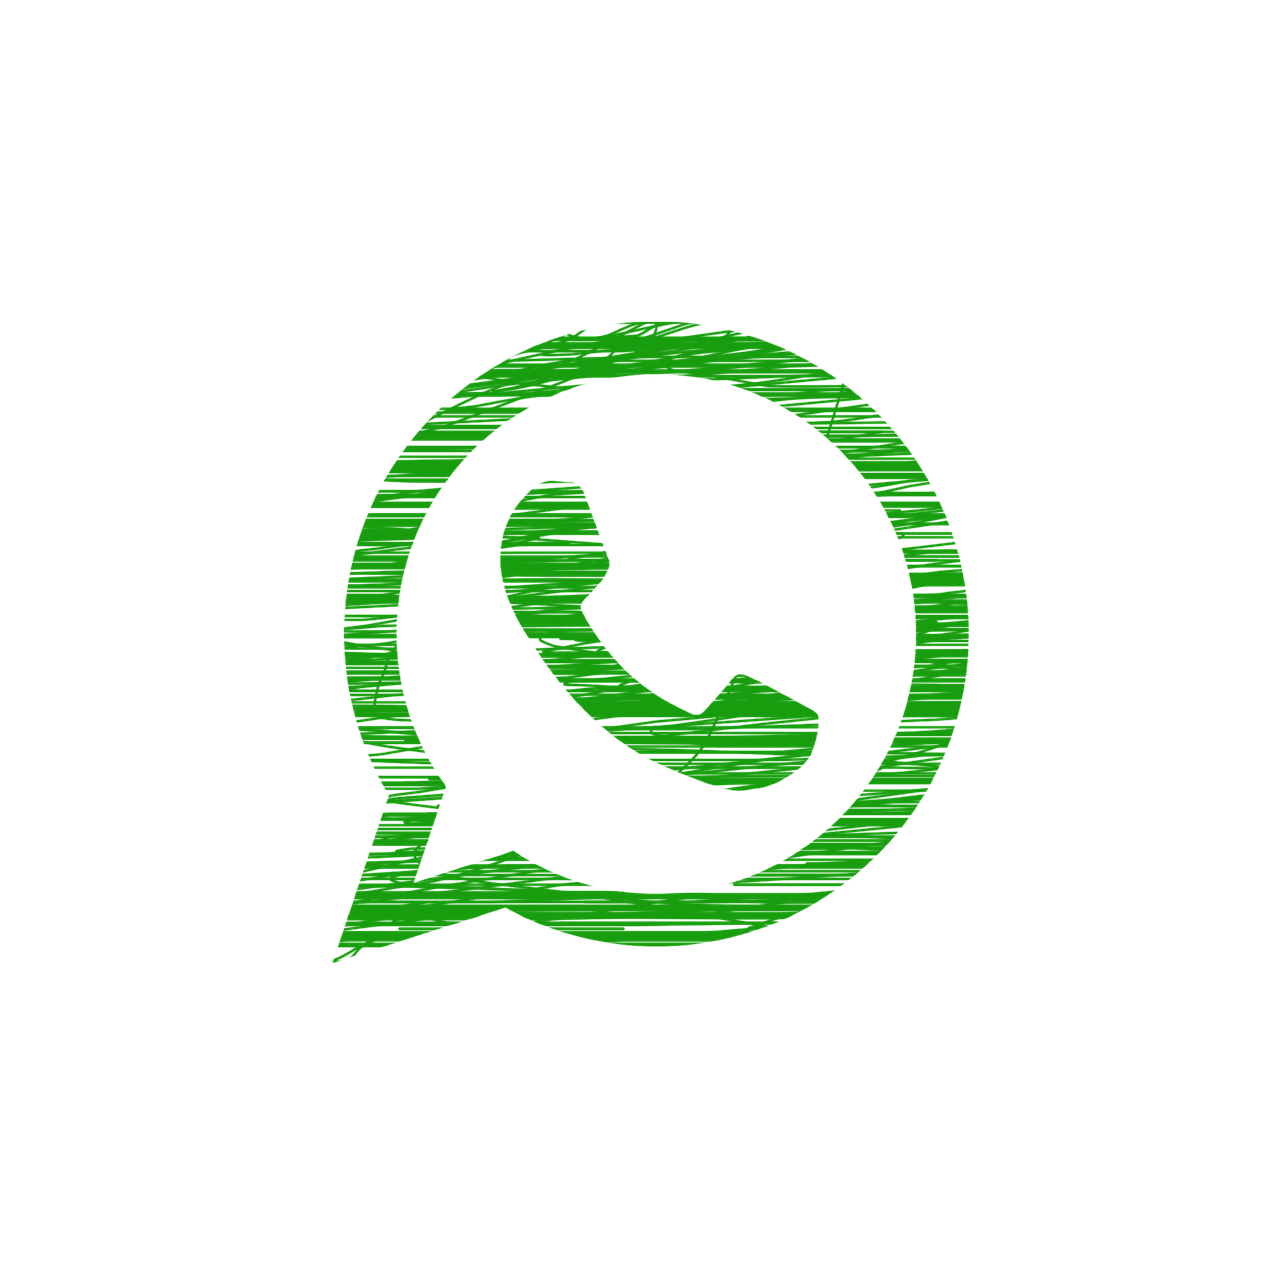 WhatsApp logo.